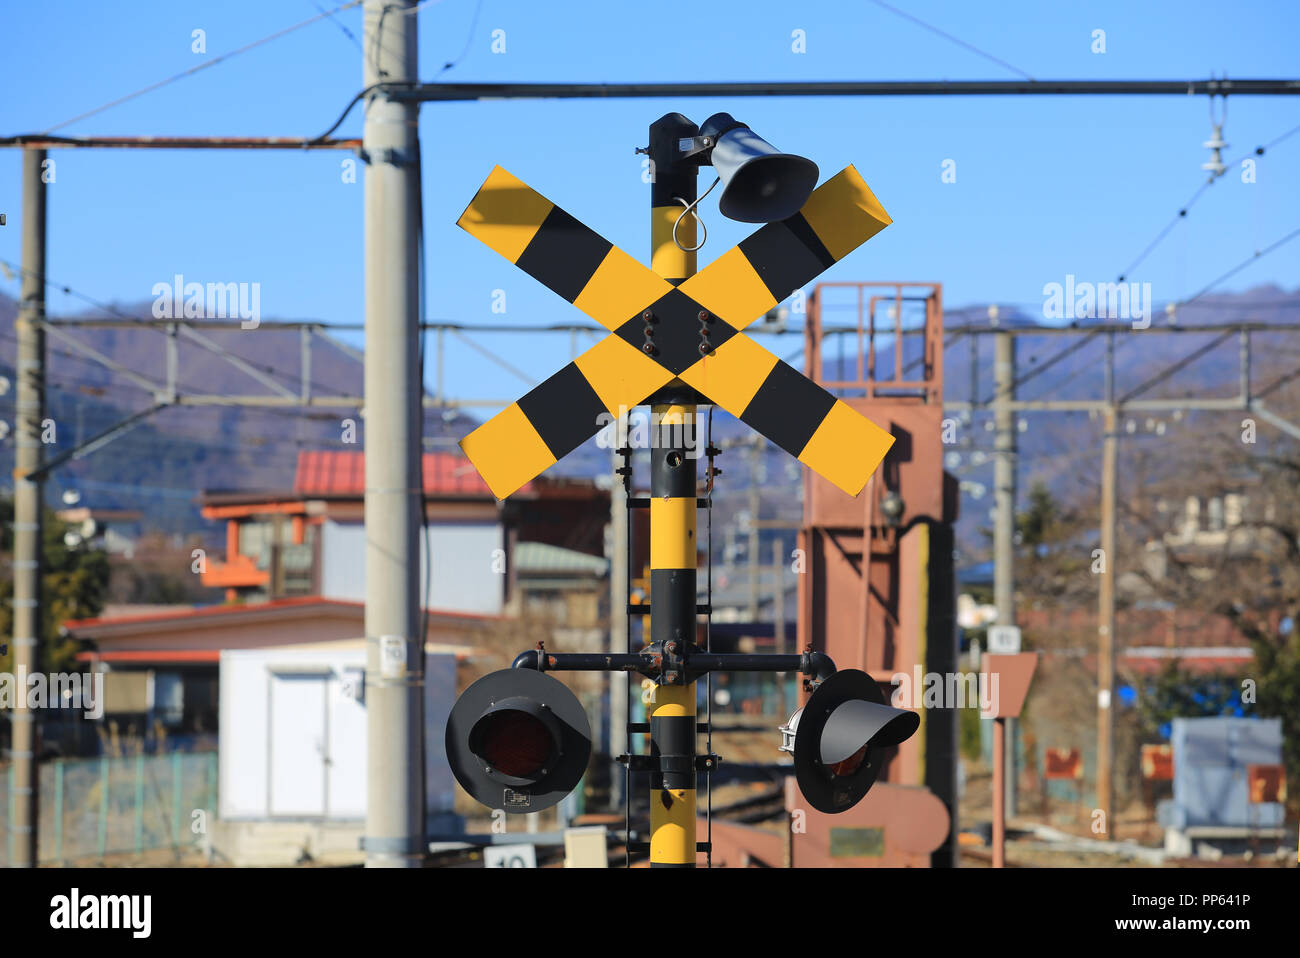 japan train railway signalling Stock Photo